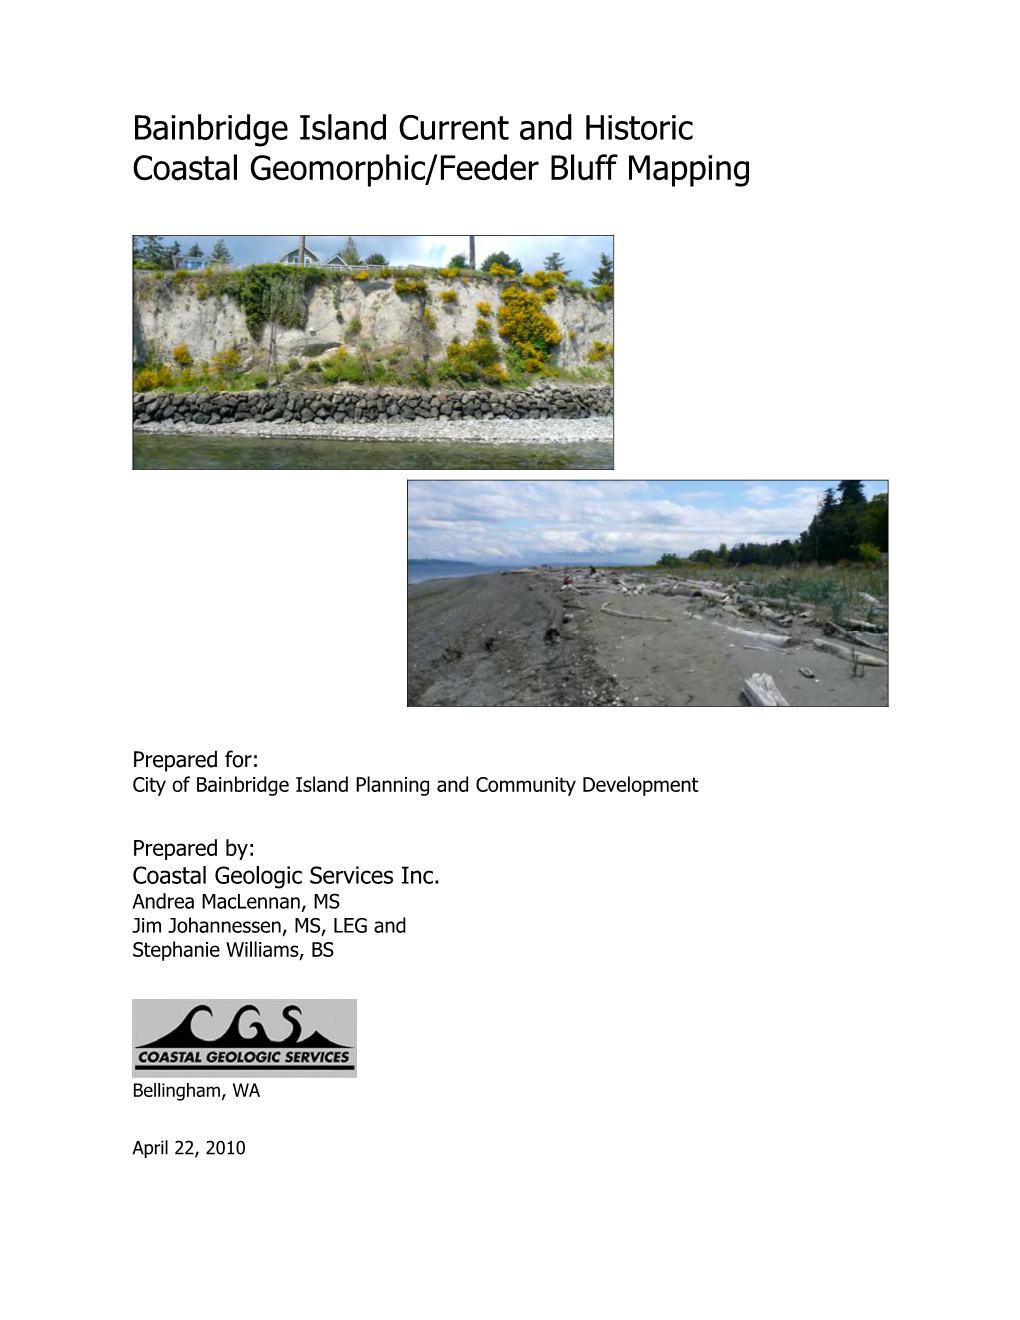 Bainbridge Island Current and Historic Coastal Geomorphic/Feeder Bluff Mapping